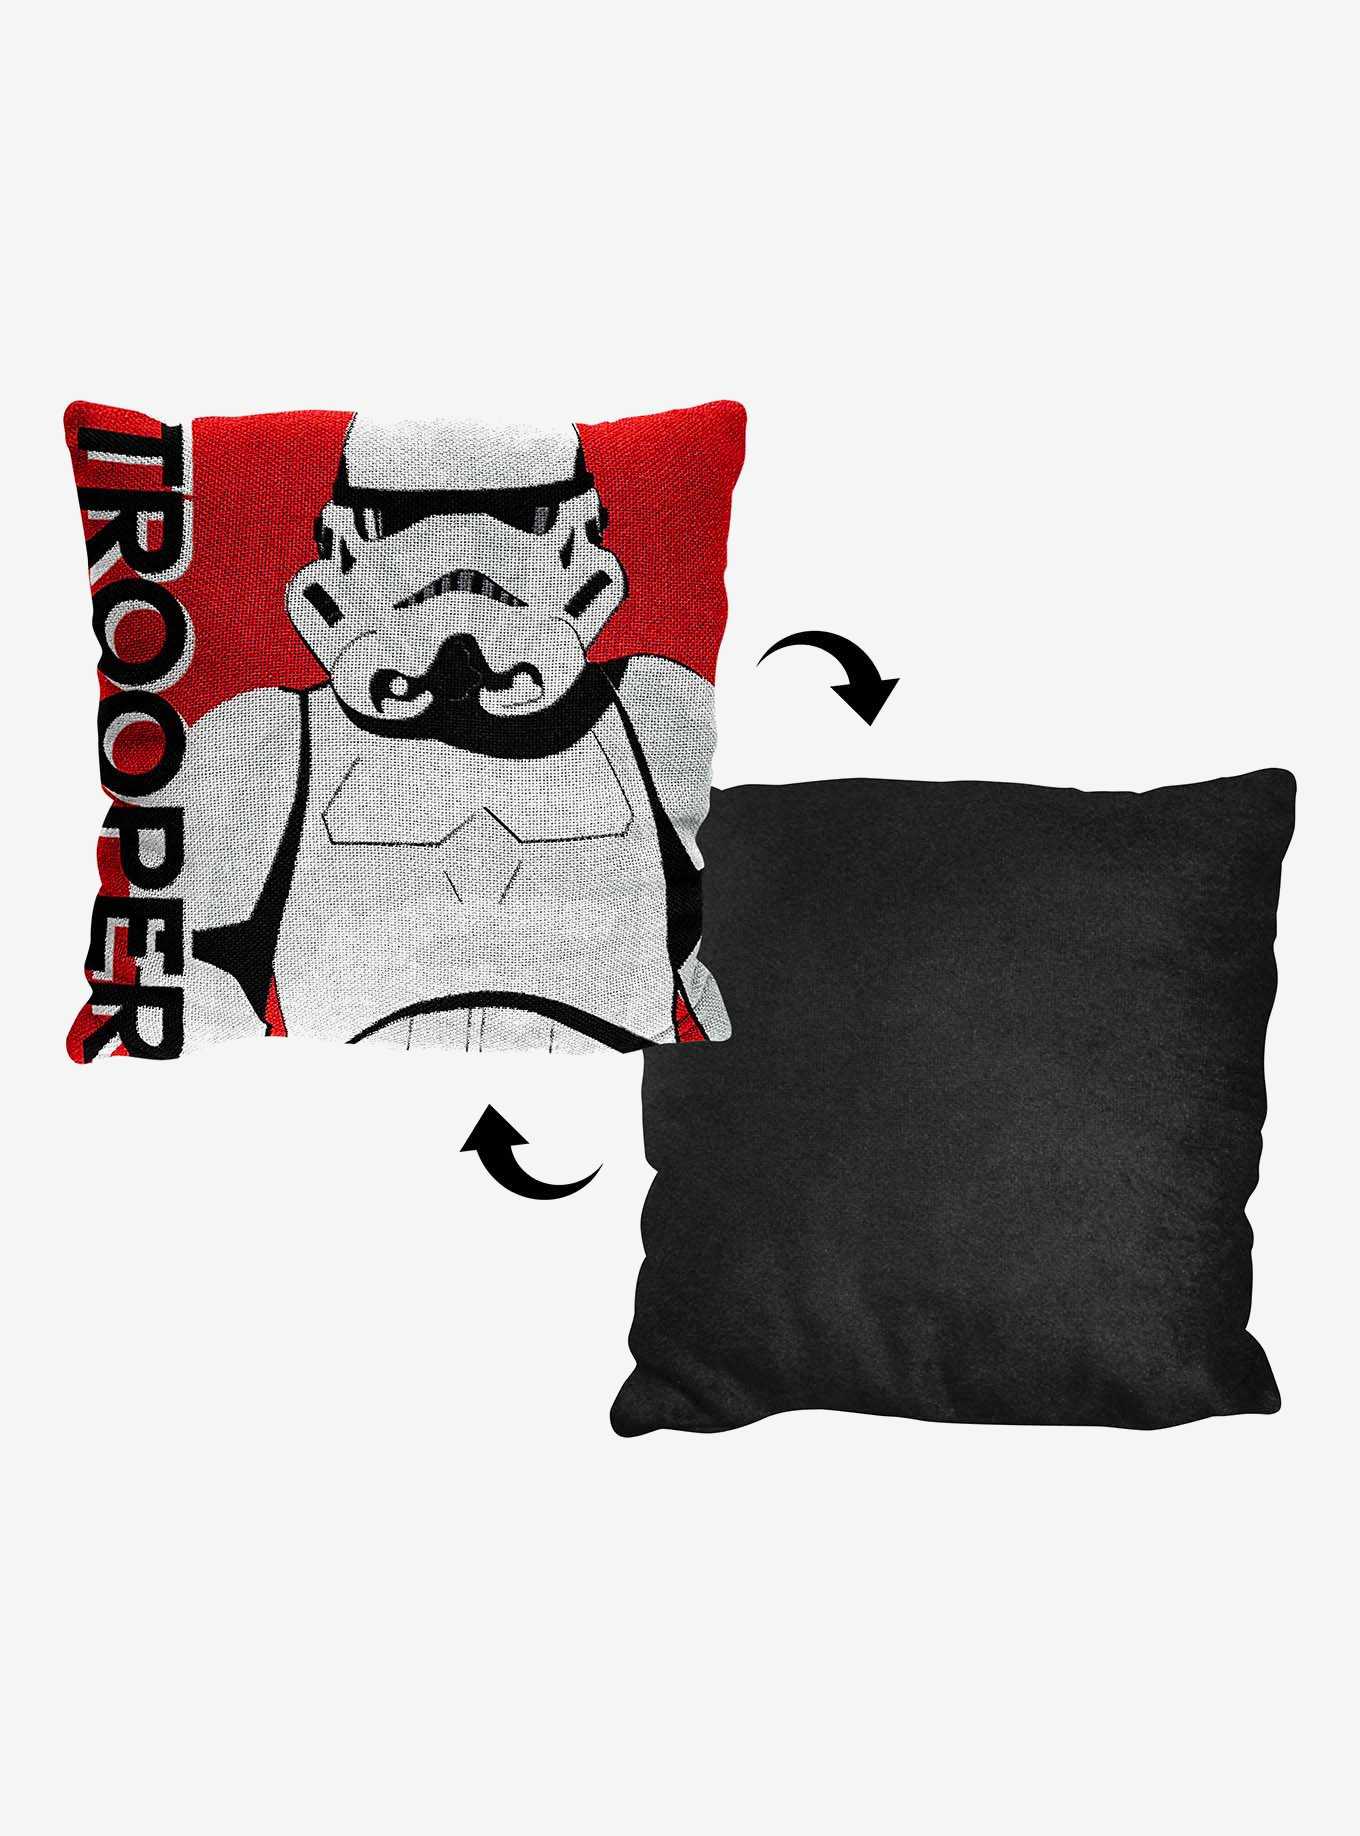 Star Wars Classic Trooper Jacquard Pillow, , hi-res